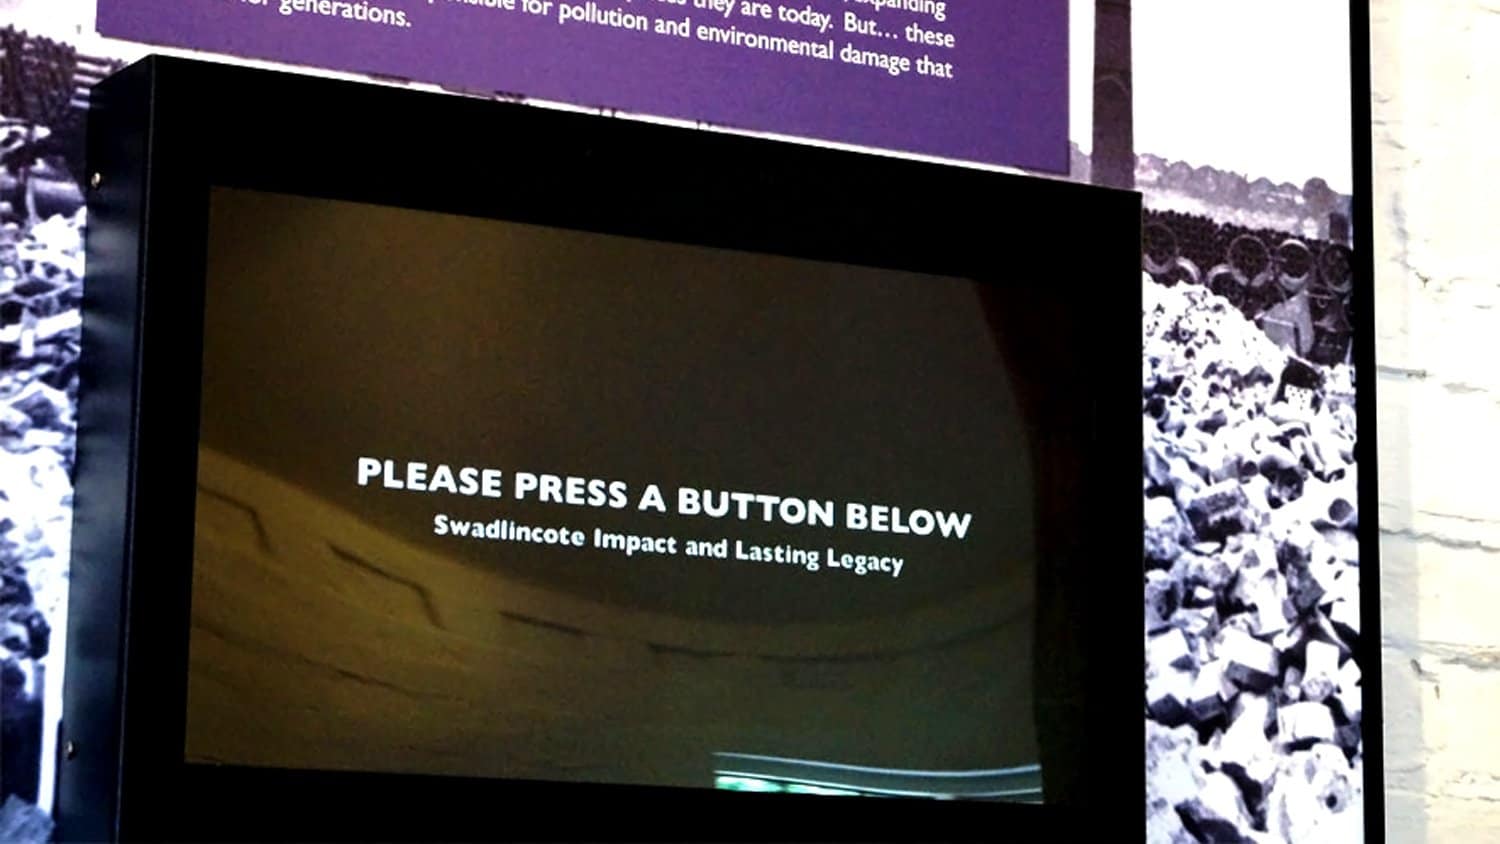 Push button museum video kiosk